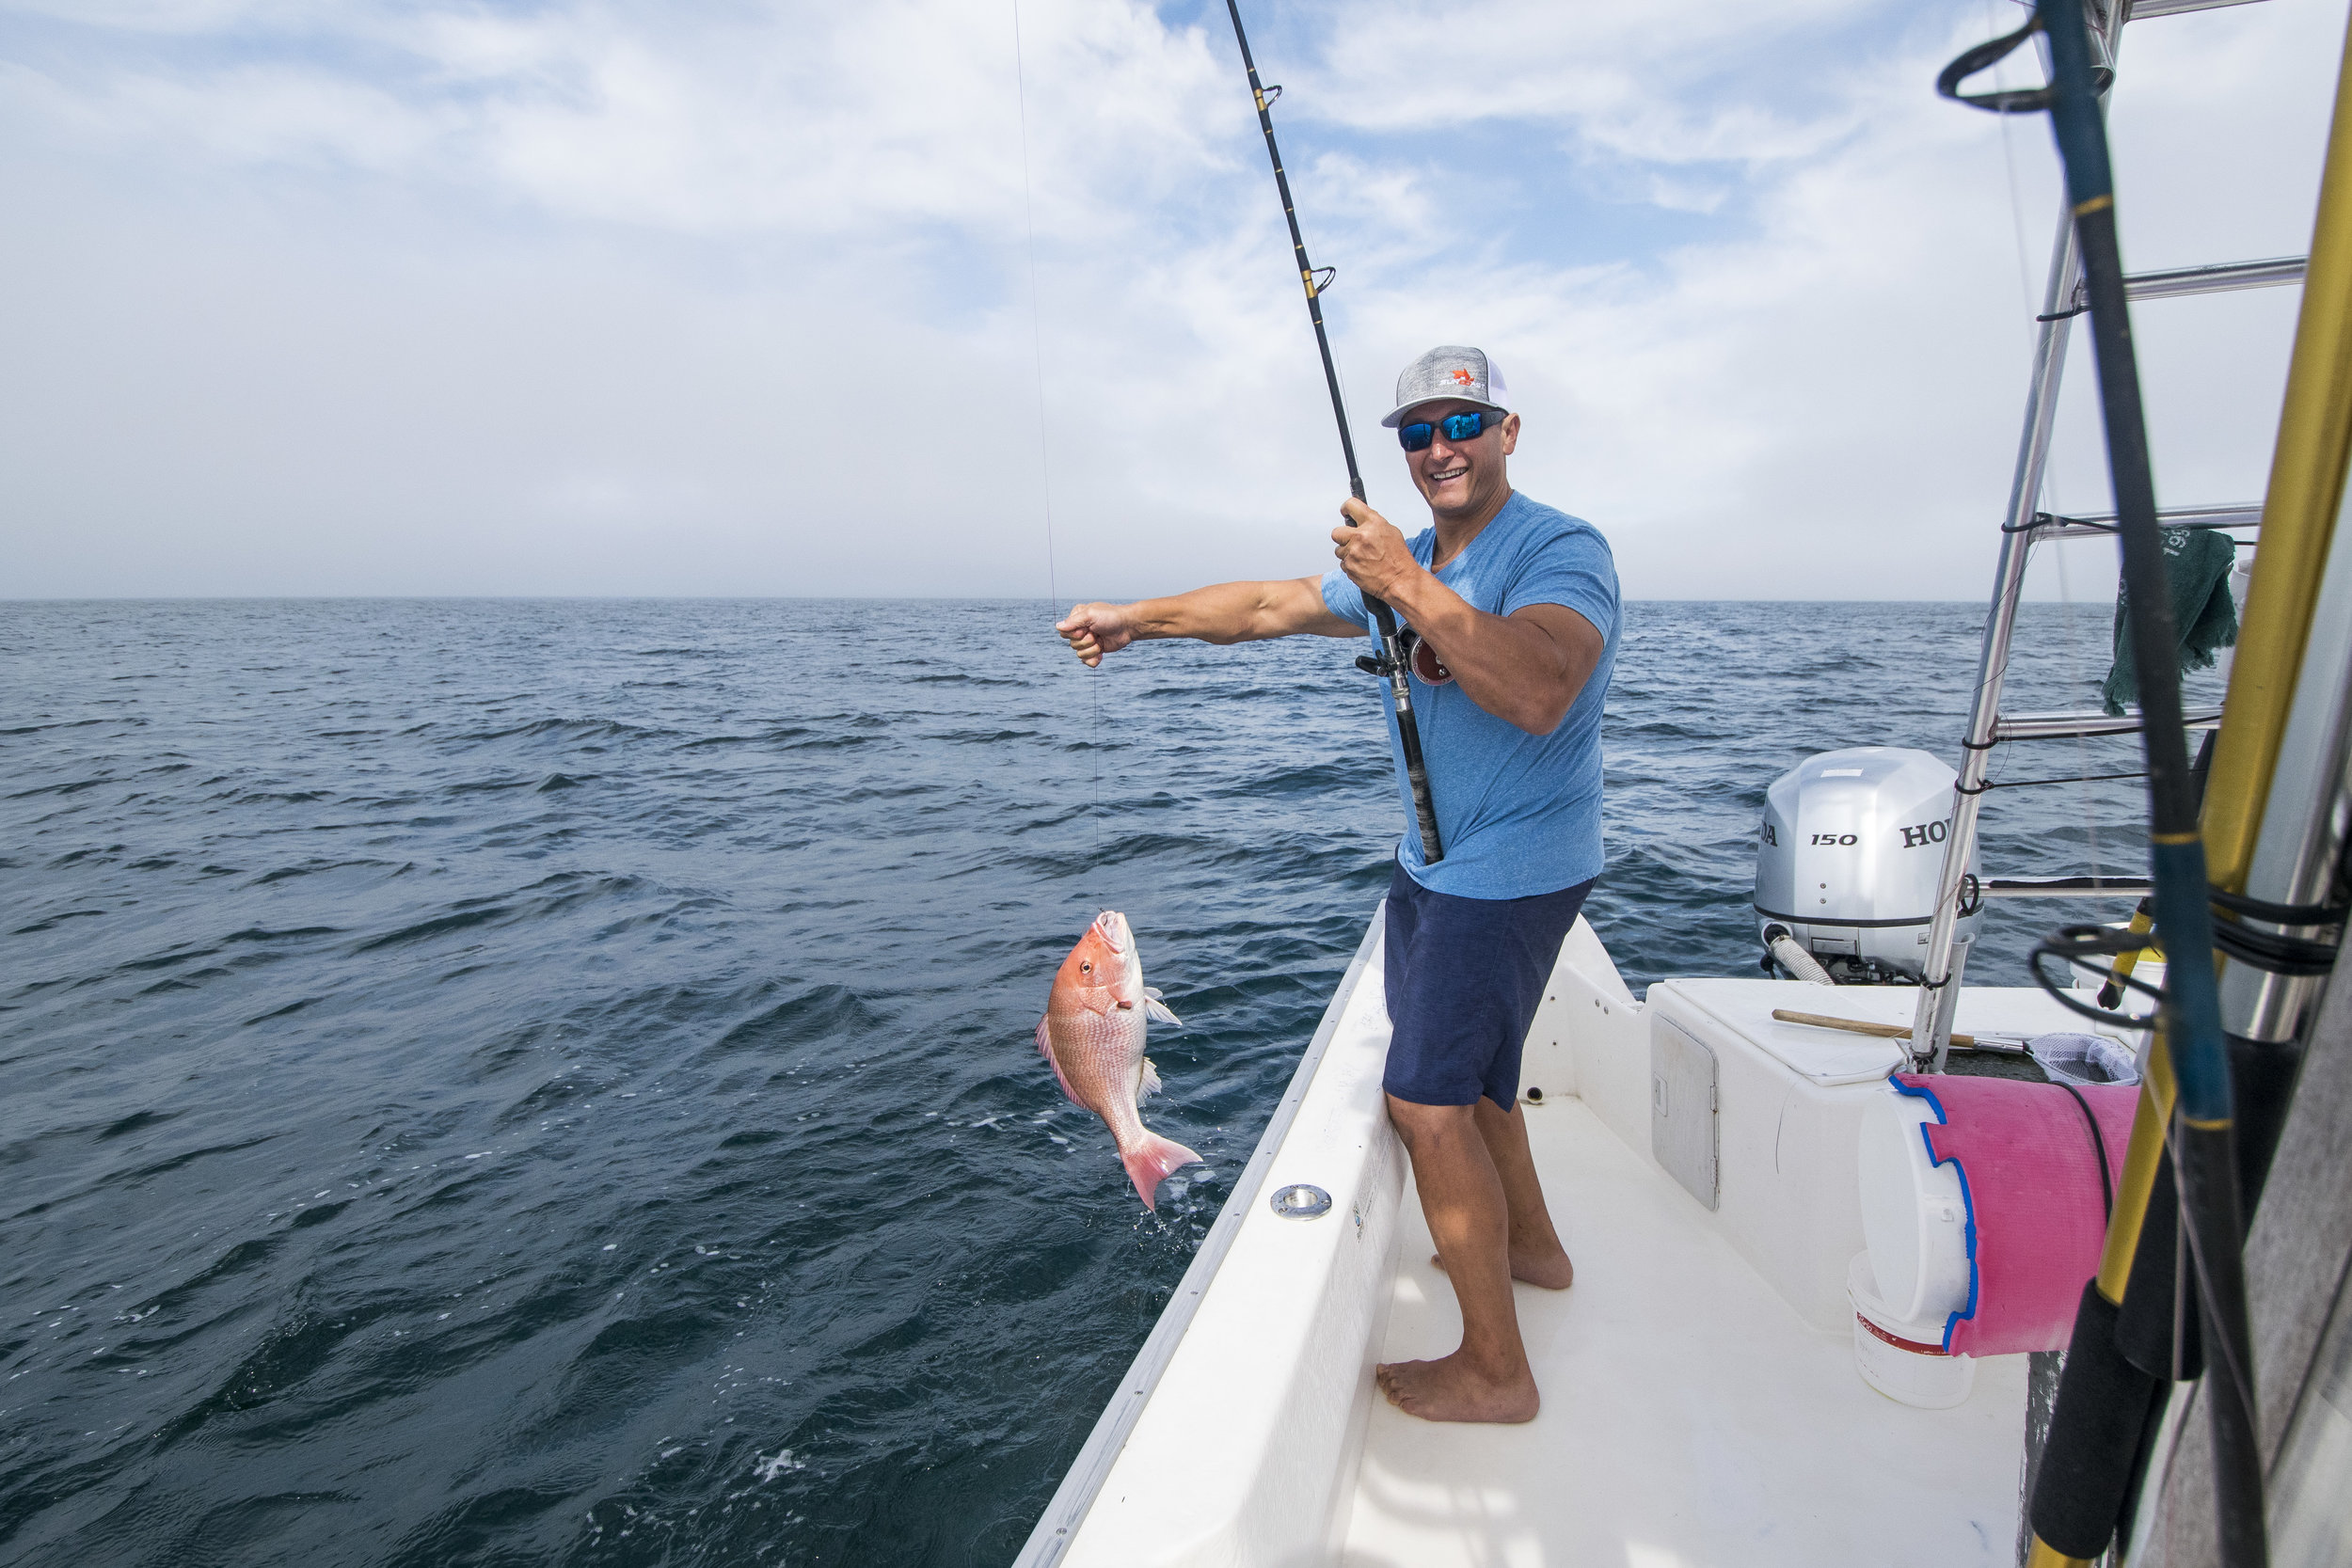  30A - Grayton Beach, FL 32459 - Grayton Girl Fishing Charters 